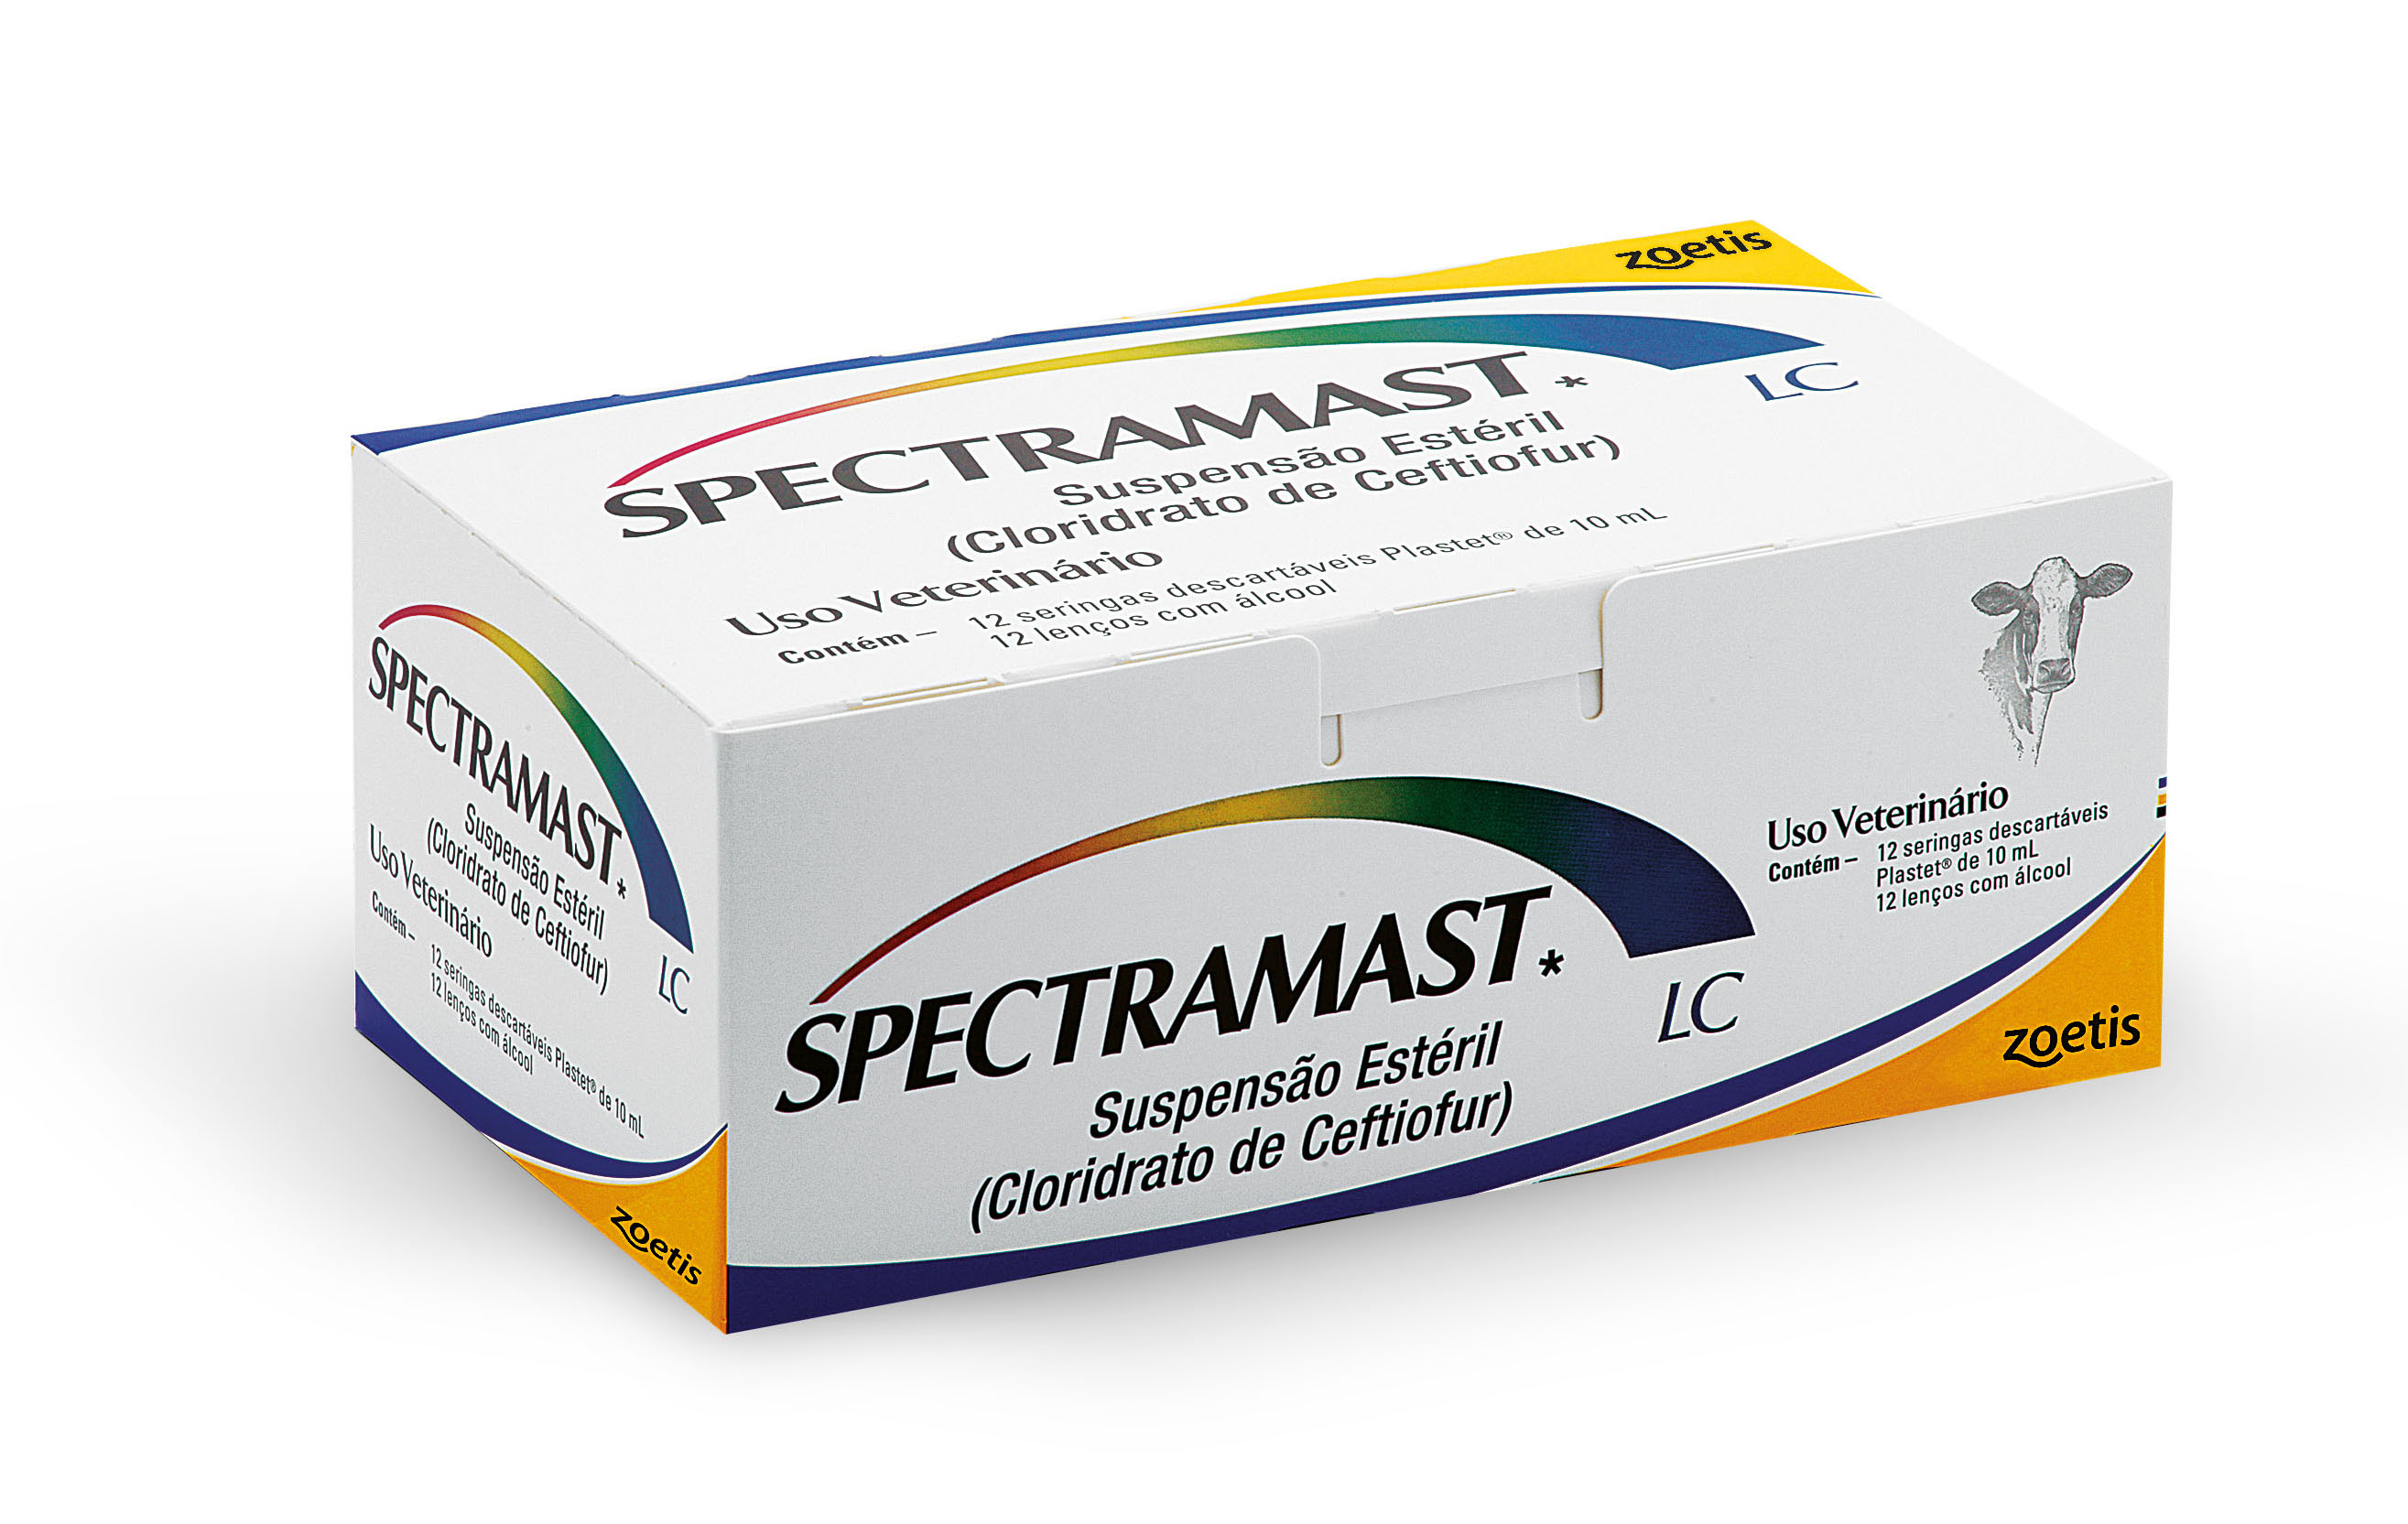 Spectramast® LC